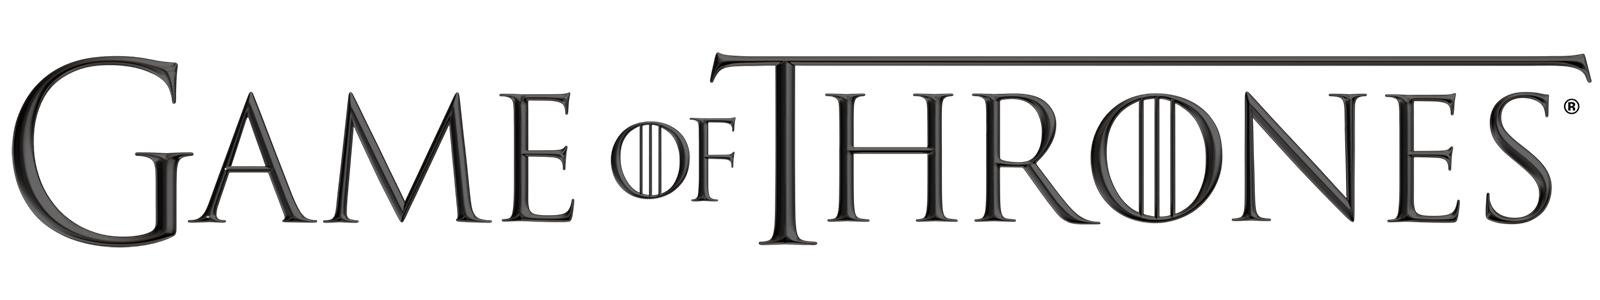 Game of Thrones font - Font Identification - Typography.Guru